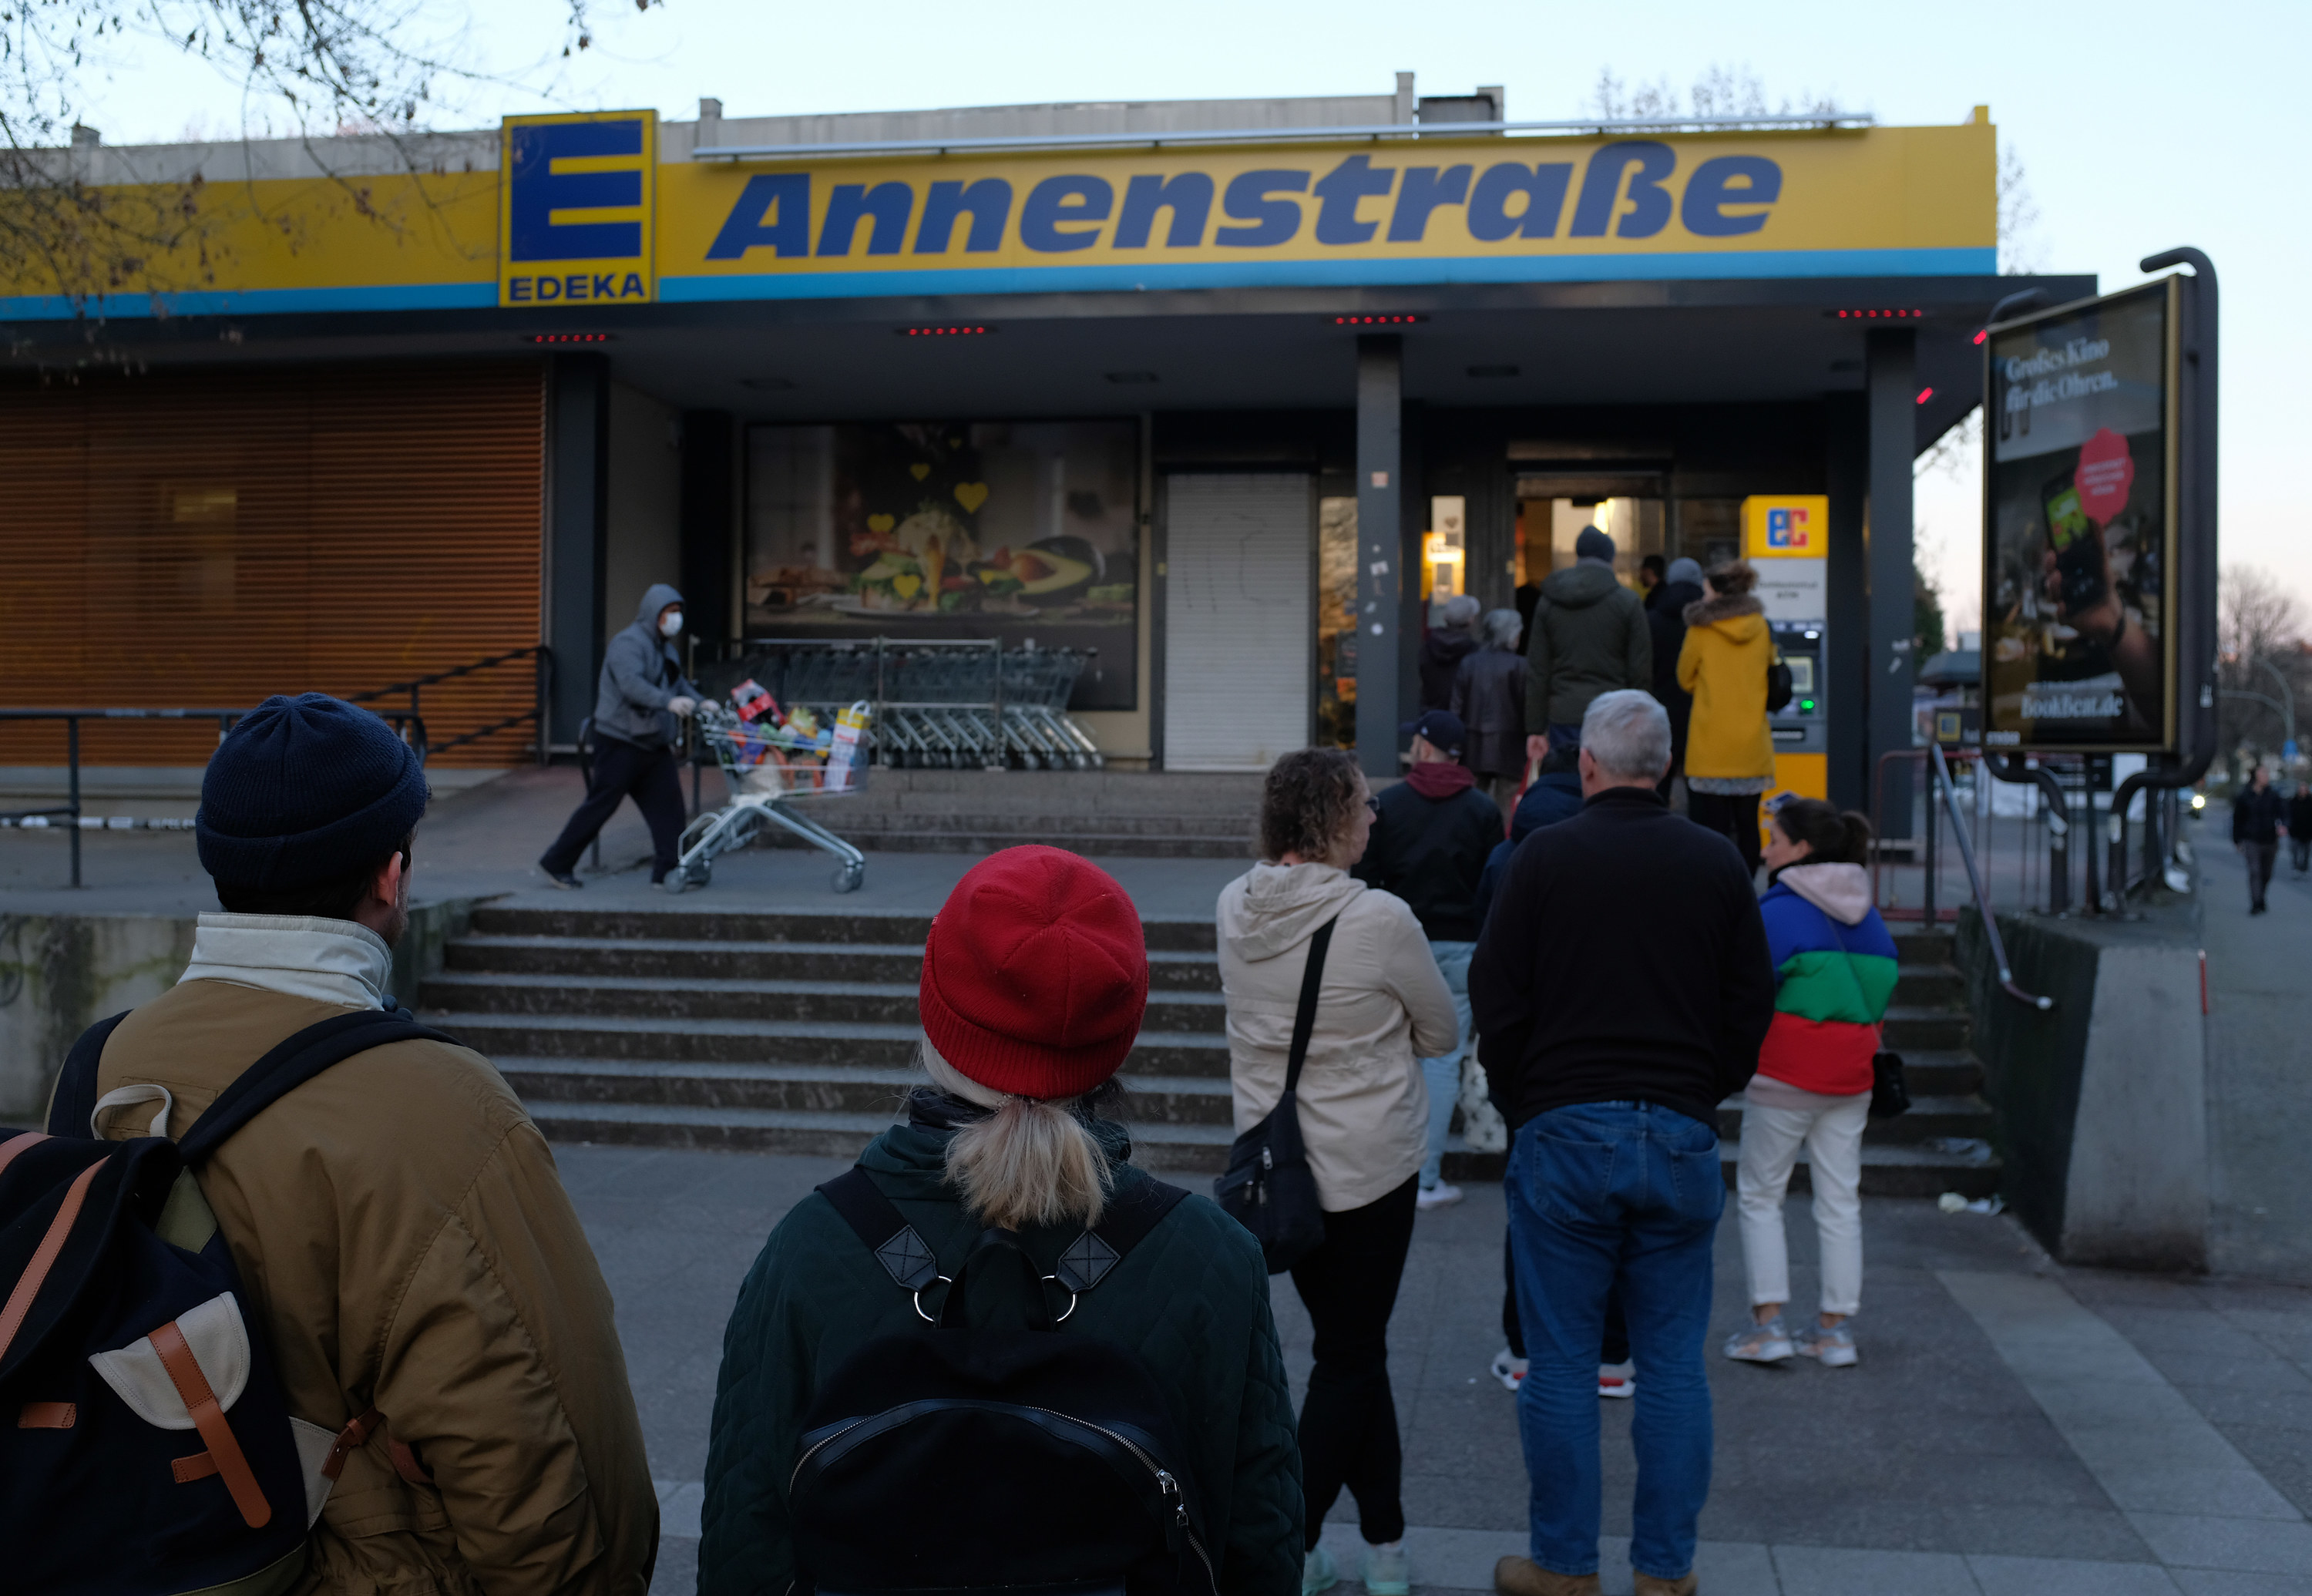 The line outside of a Edeka Annenstraße supermarket